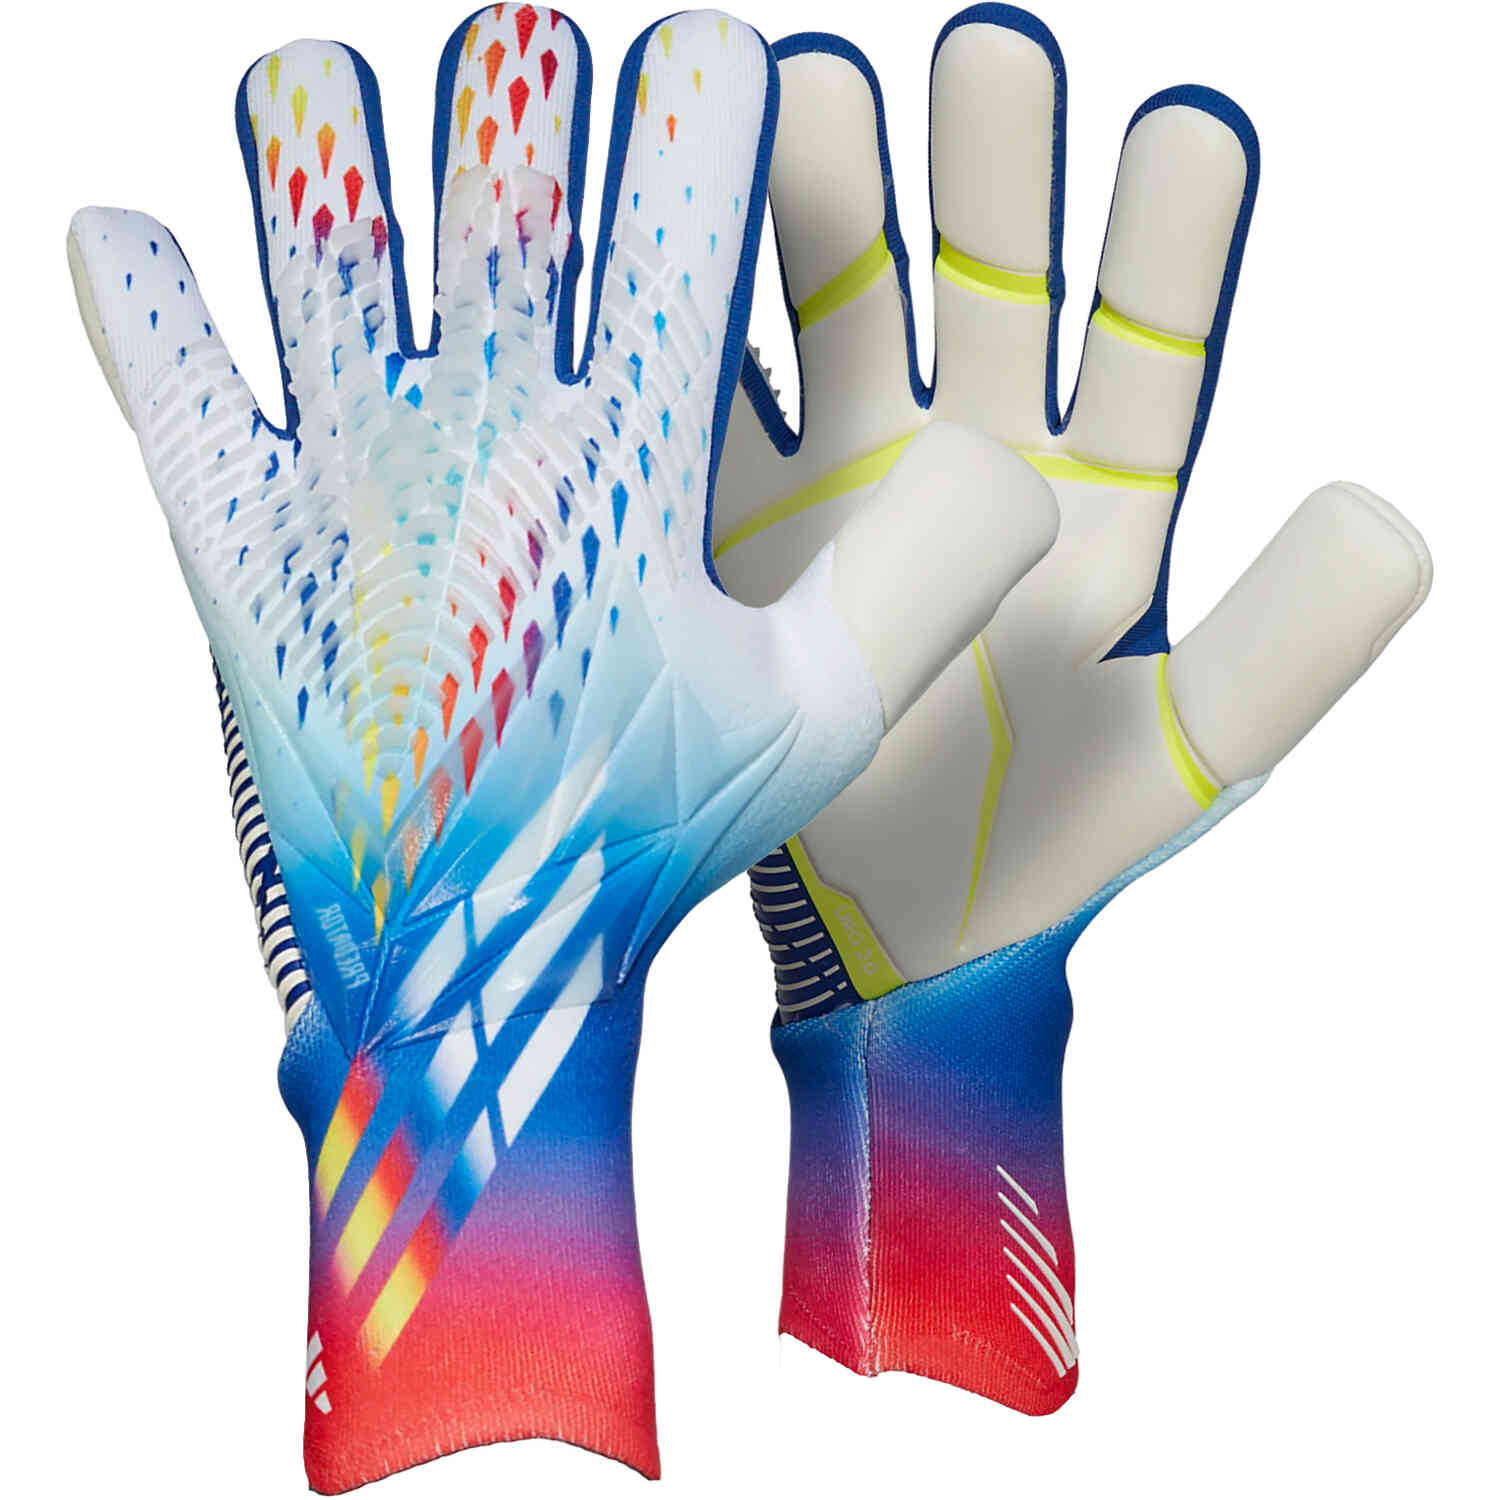 Adidas Al Rihla - The 2022 World Cup gloves 